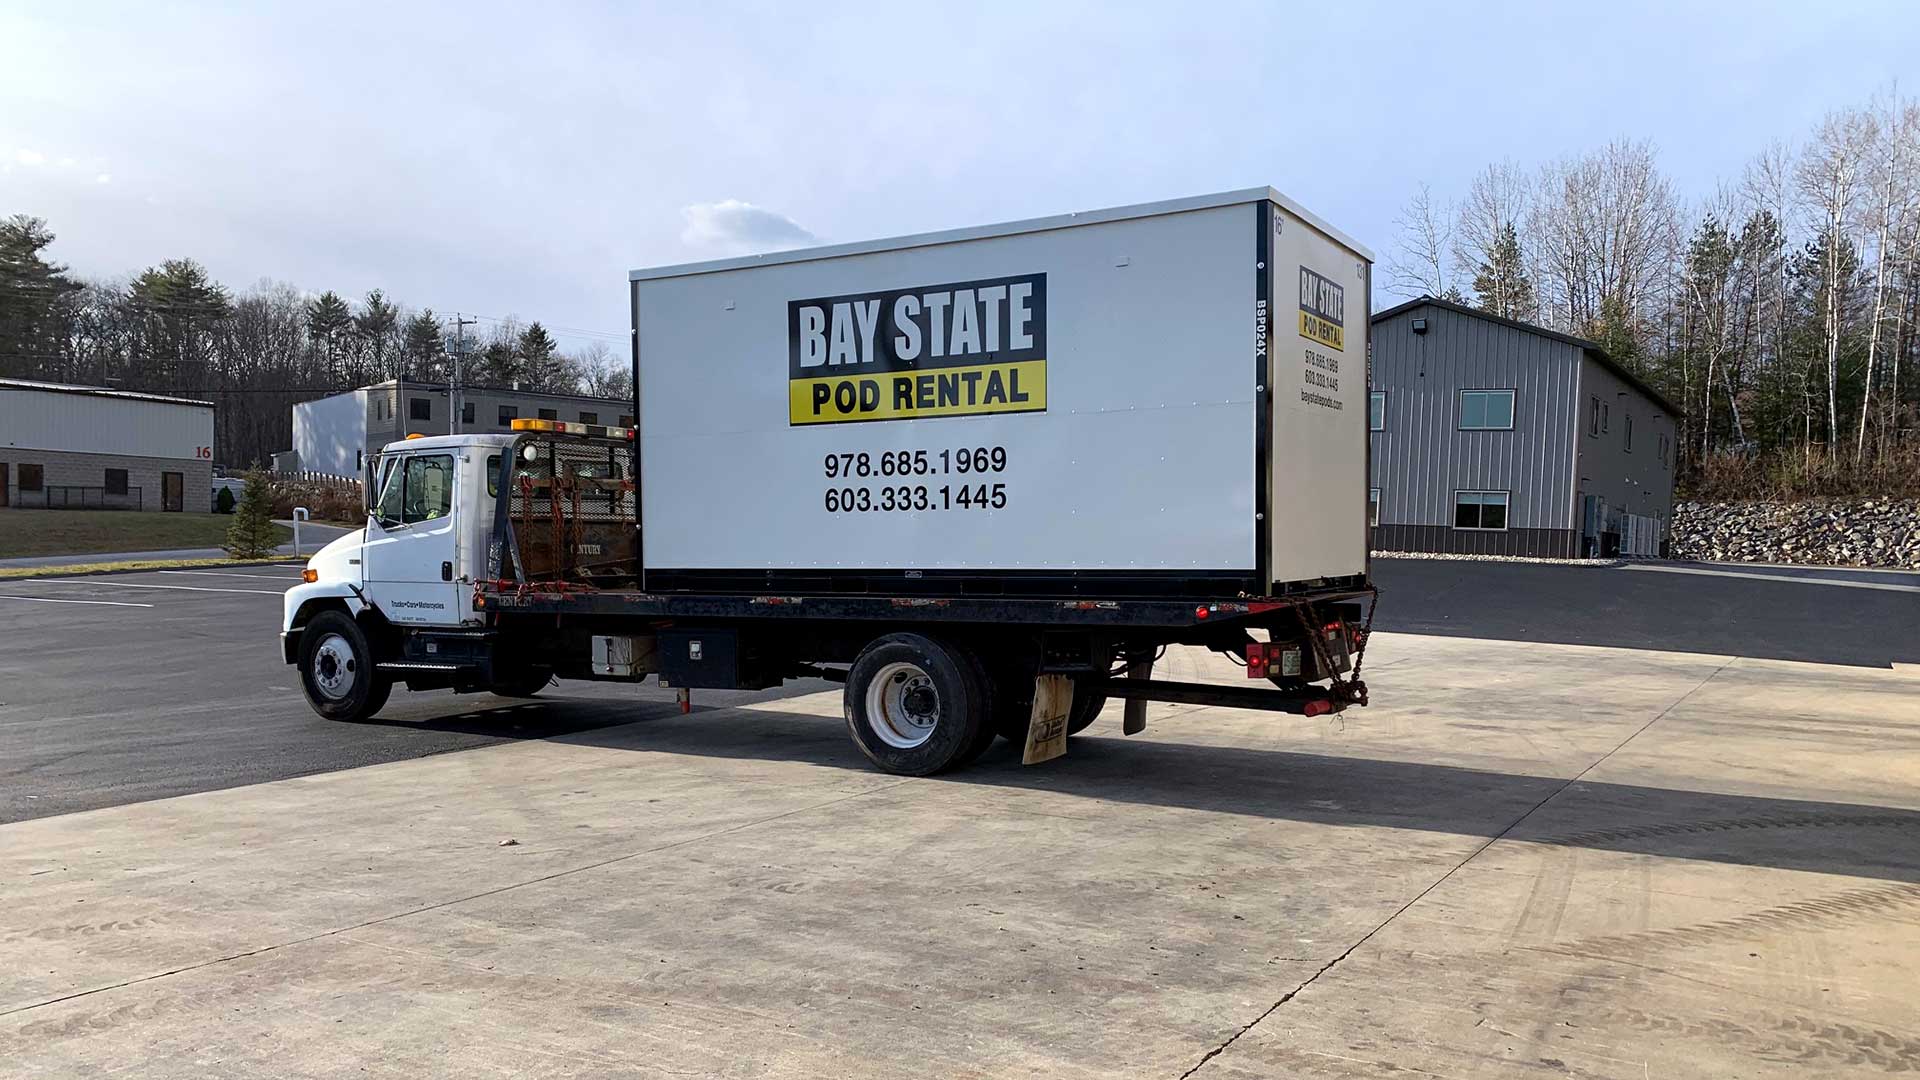 Bay State Pod Rental truck in parking lot